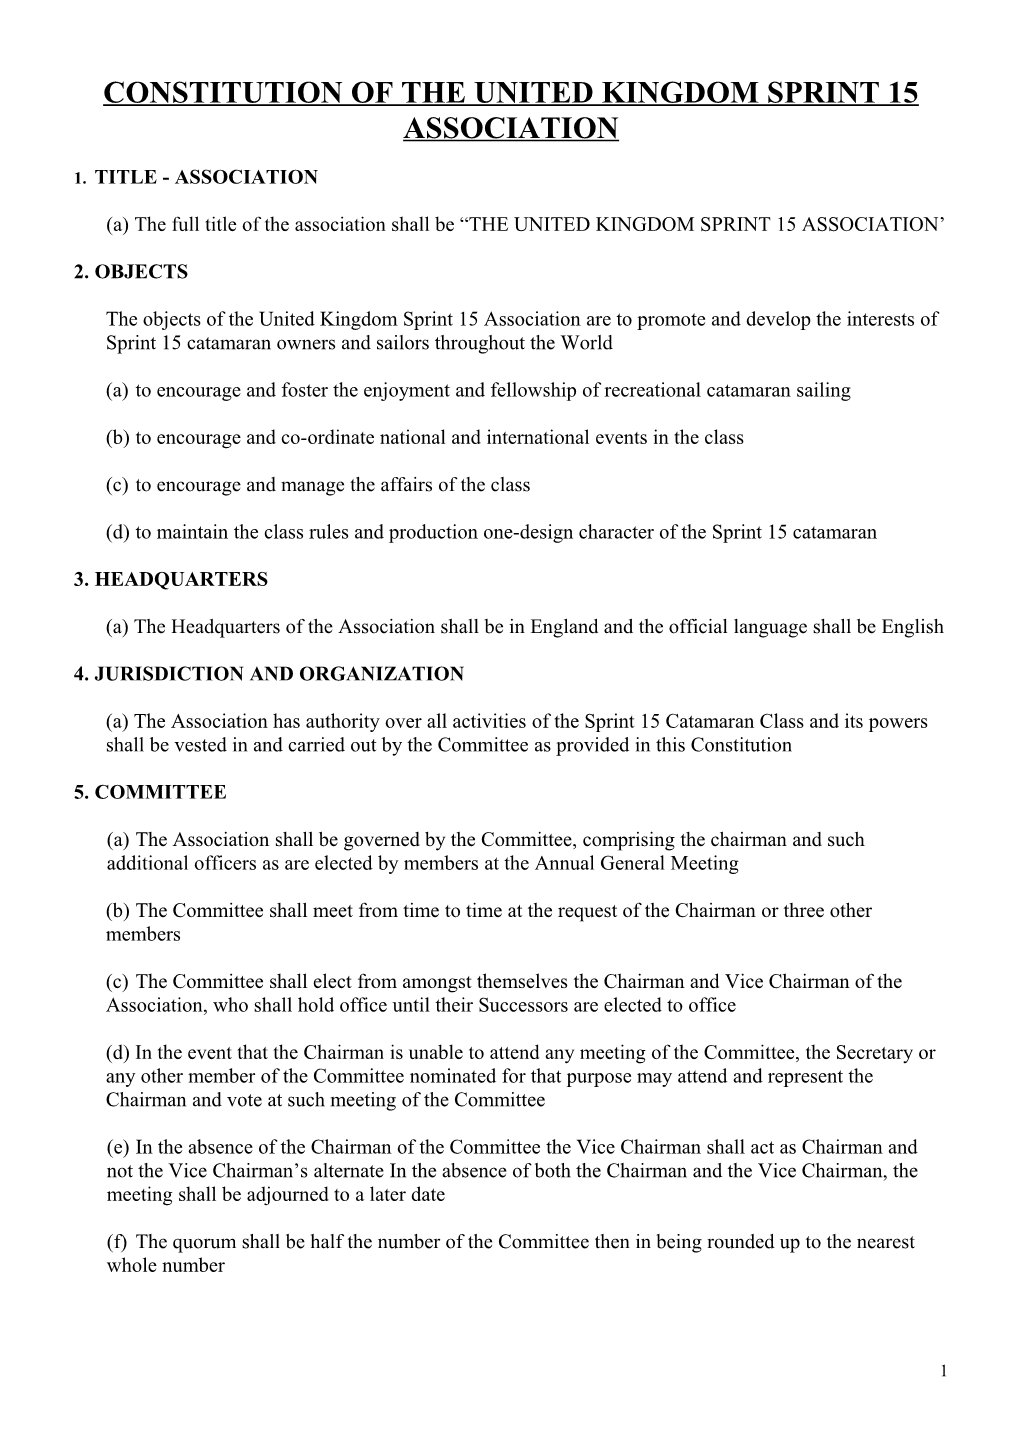 Constitution of the Dart 15 International